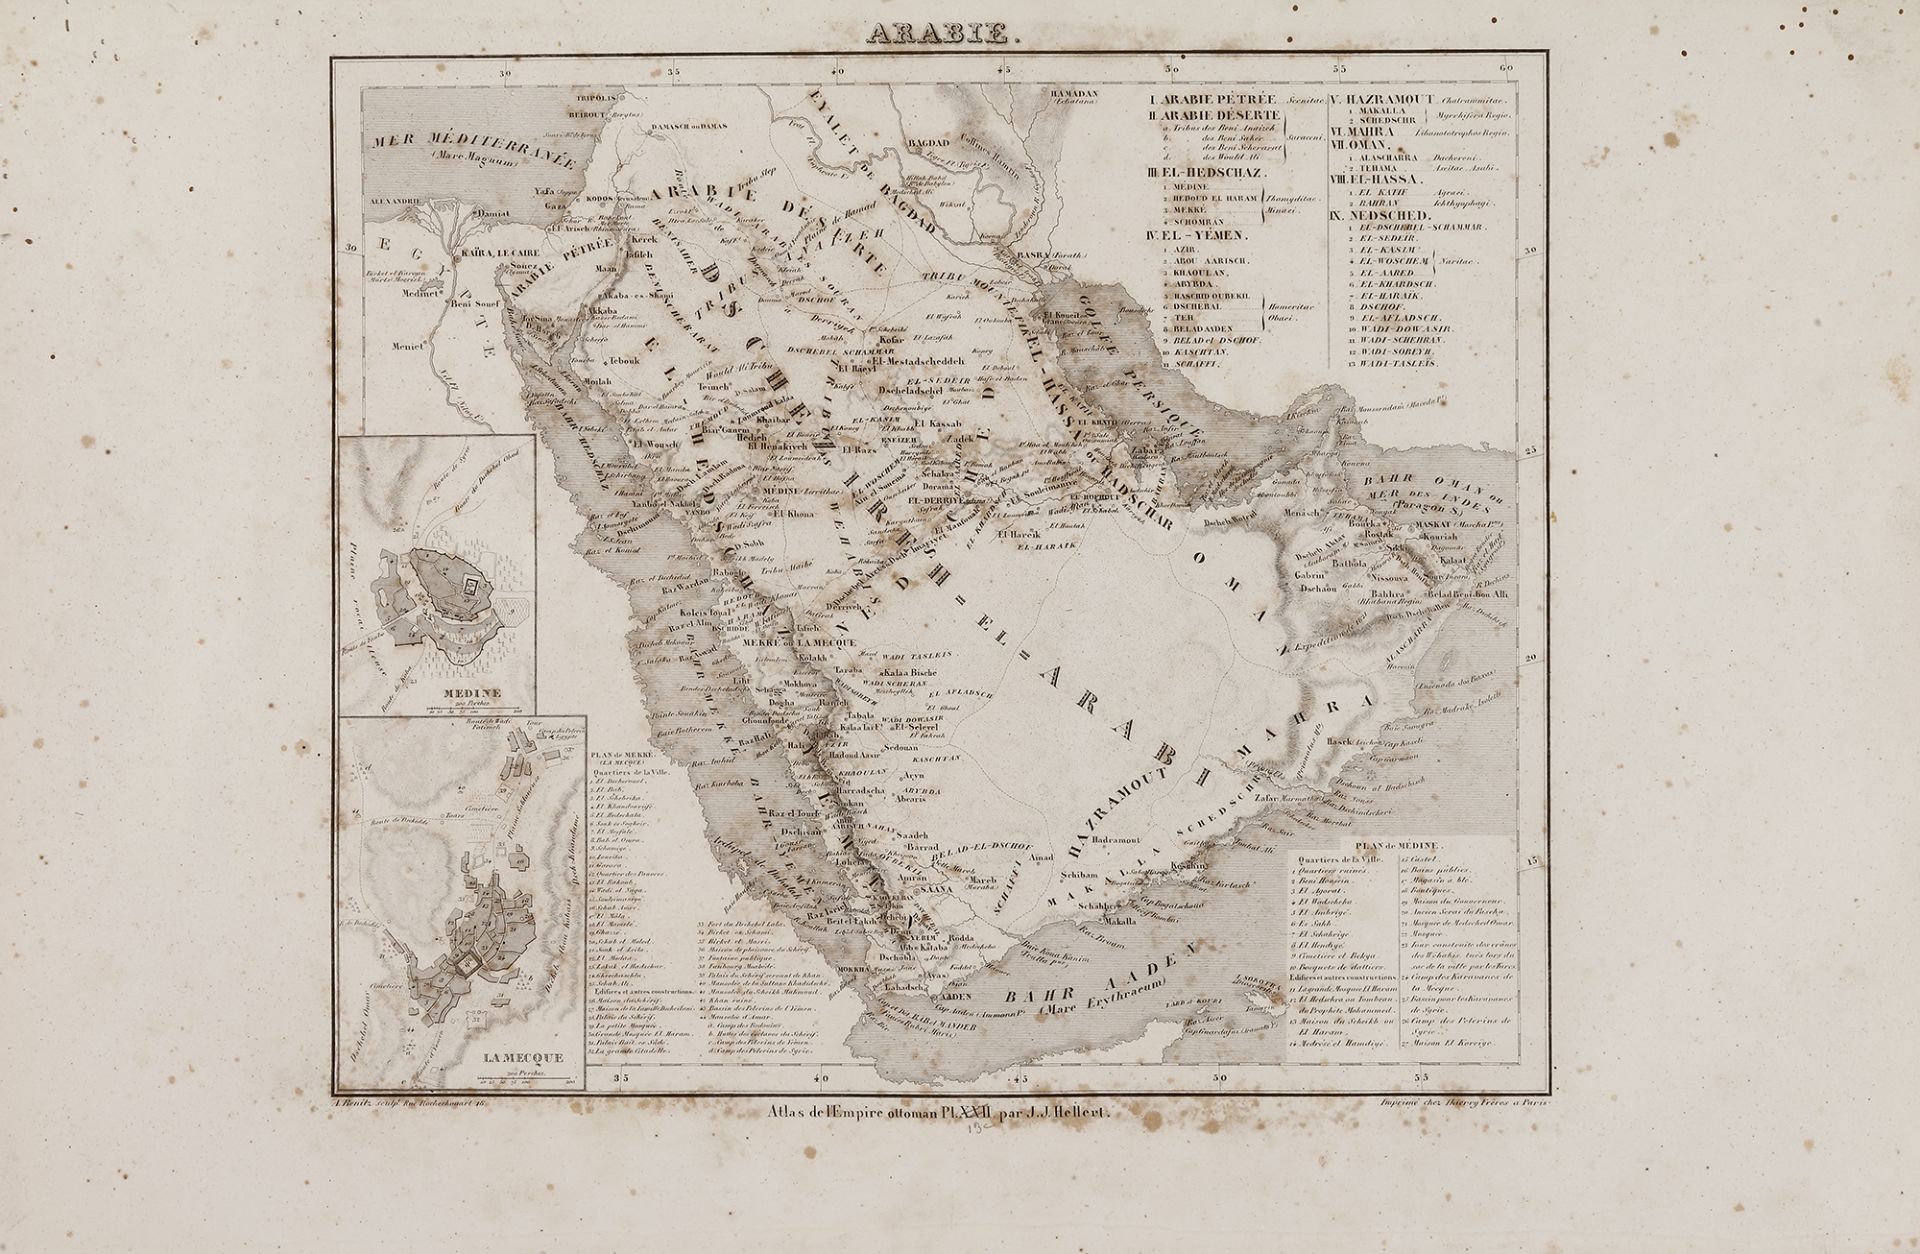 A RARE NON COLORED PRINTED FRENCH MAP OF THE ARABIC WORLD DURING THE OTTOMAN EMPIRE (ARABIA PENINSUL